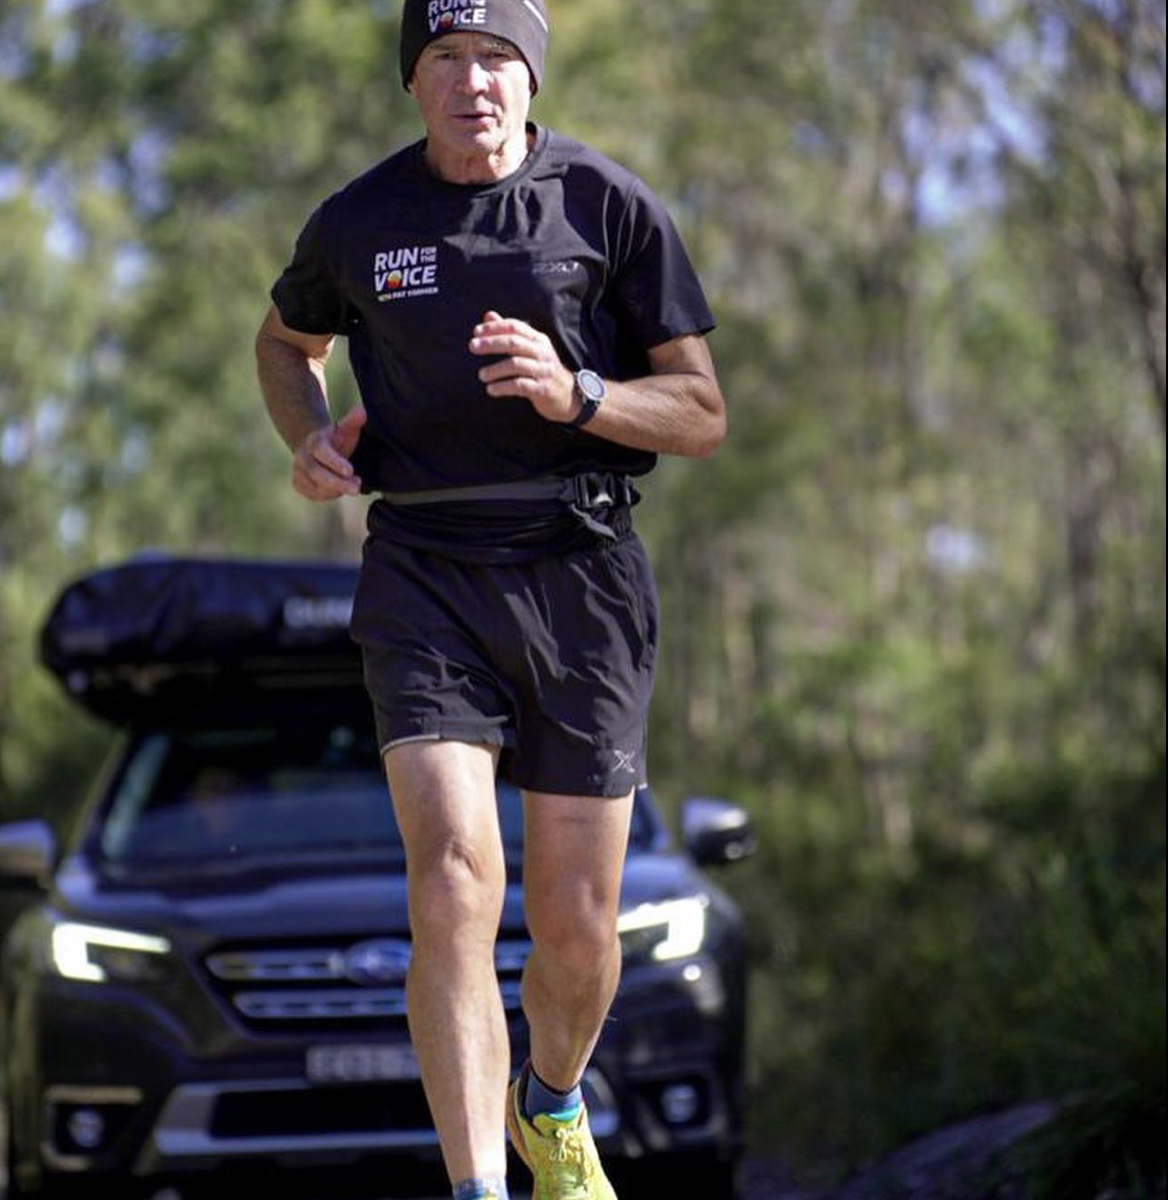 Ultramarathon legend Pat Farmer in Tasmania for the Run For The Voice